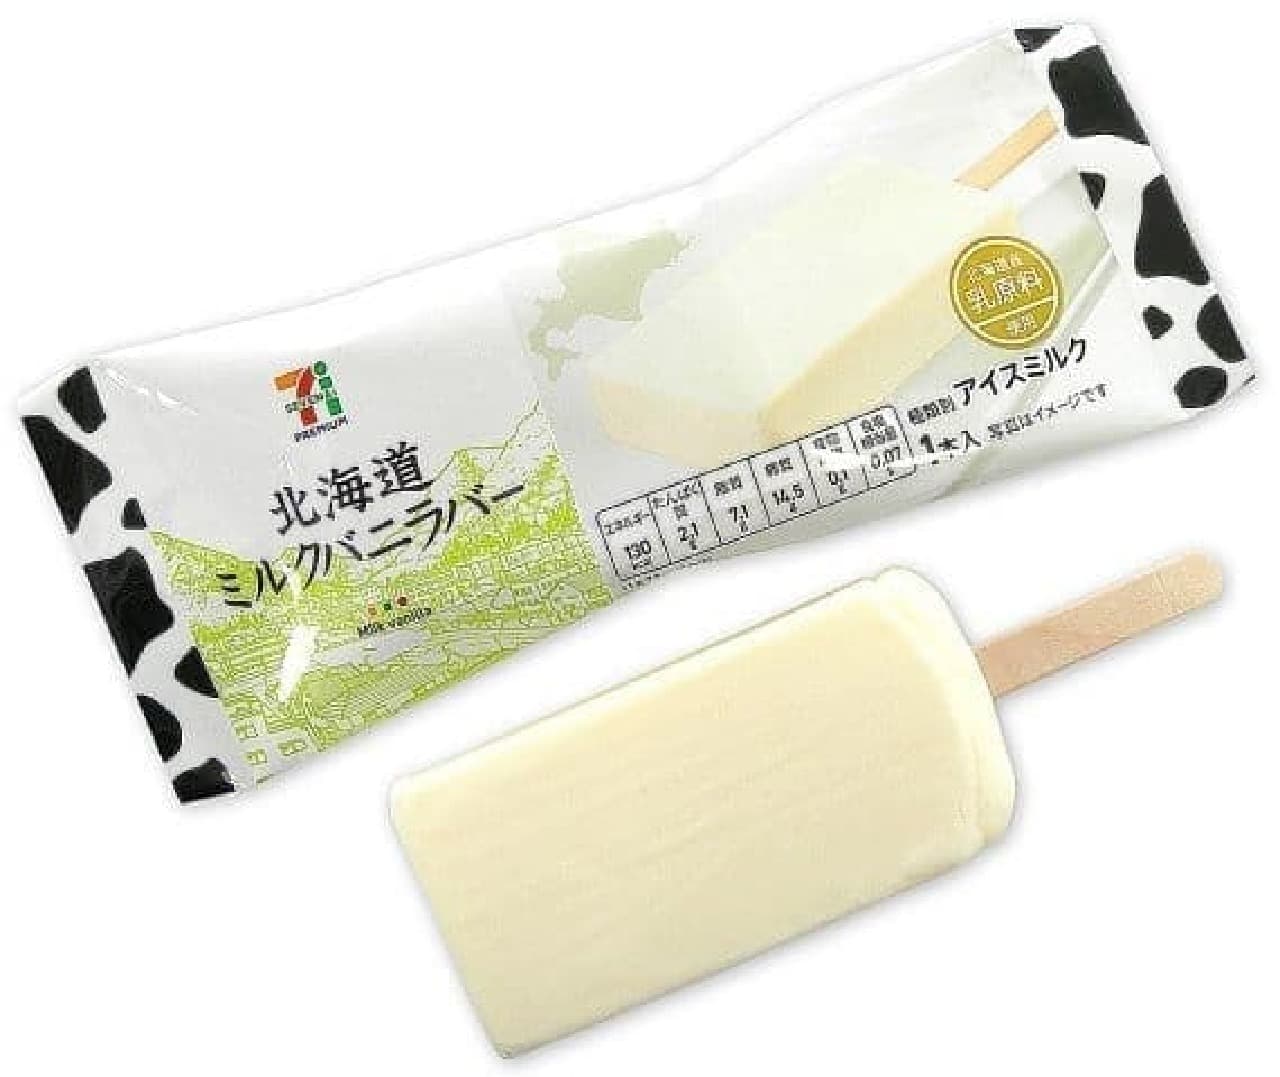 7-ELEVEN "7 Premium Hokkaido Milk Vanilla Rubber"